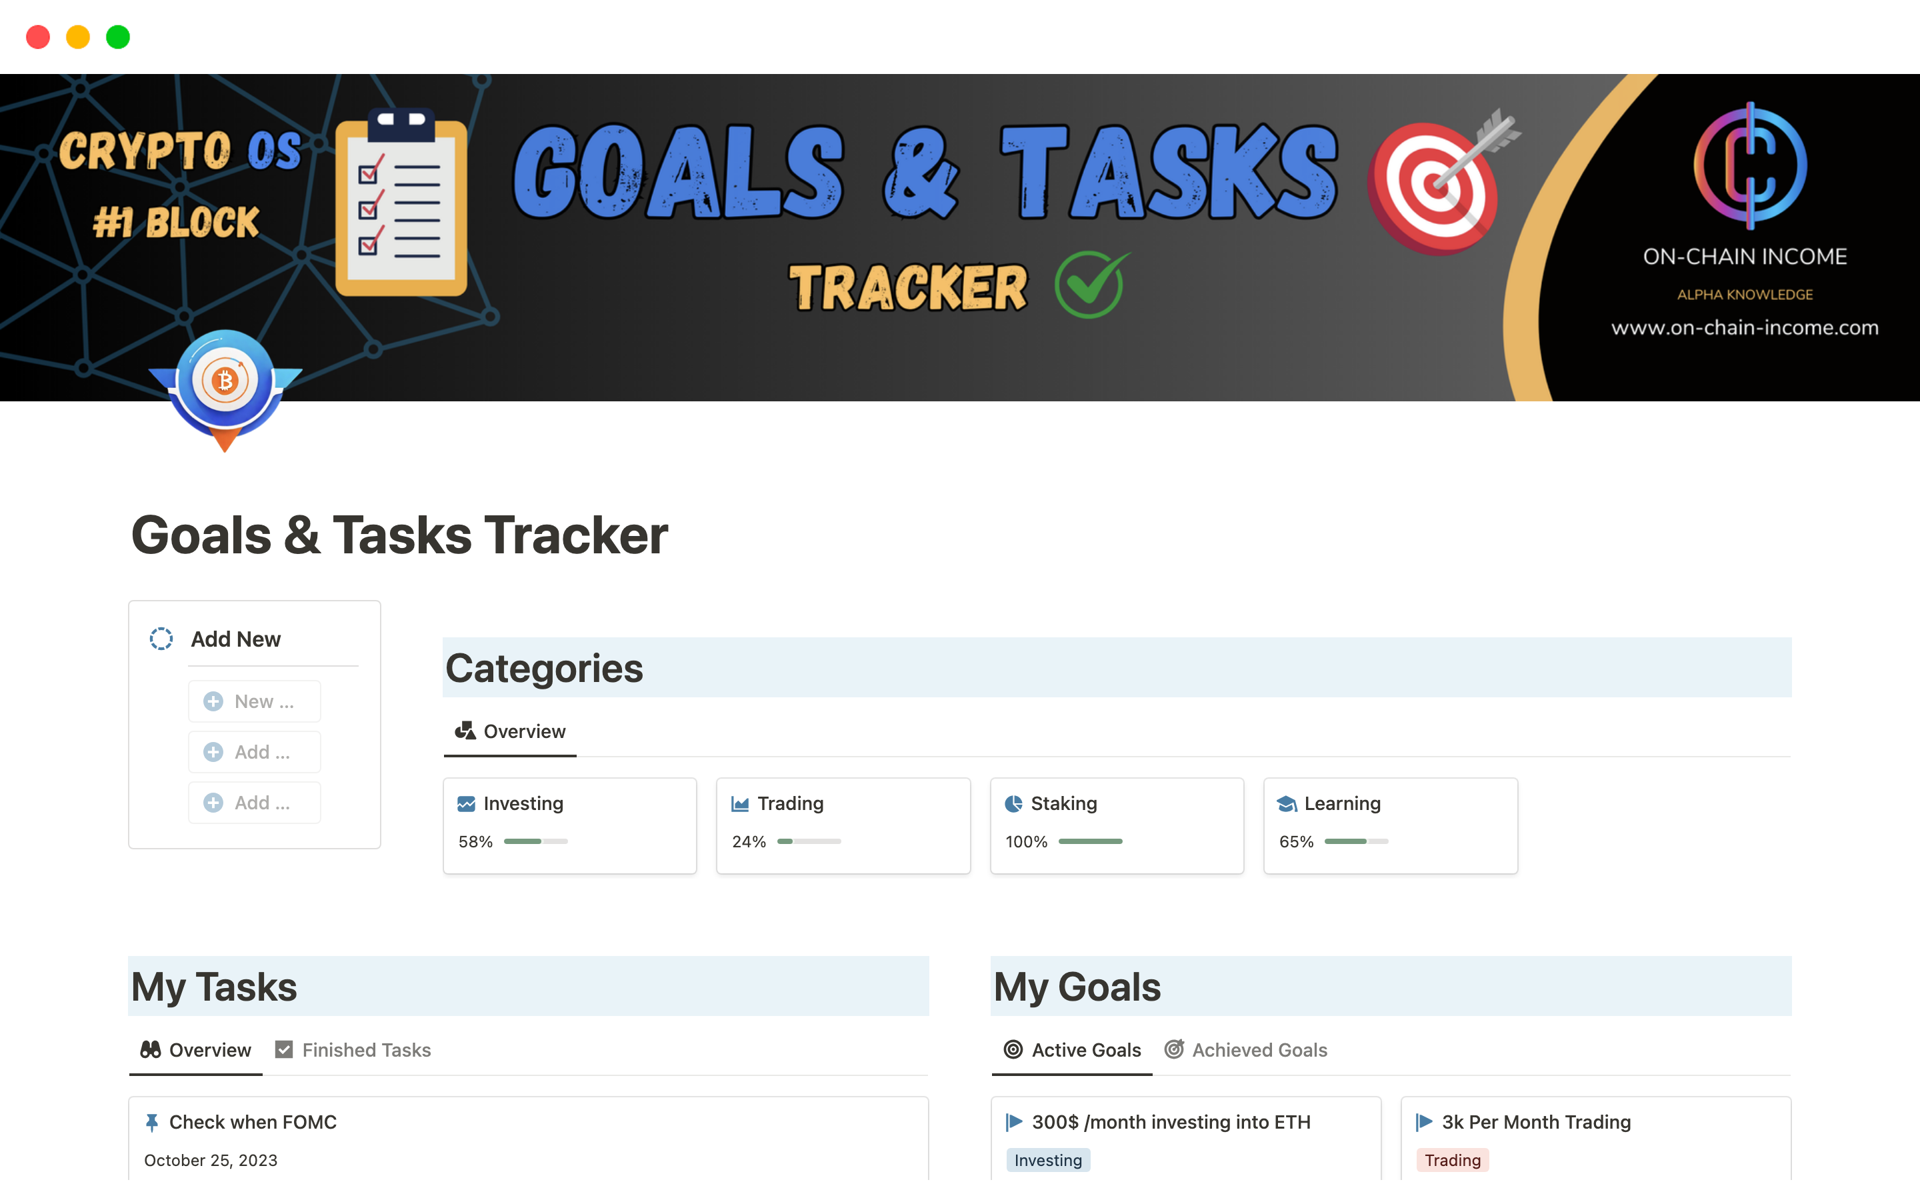 Aperçu du modèle de Goals & Tasks Tracker